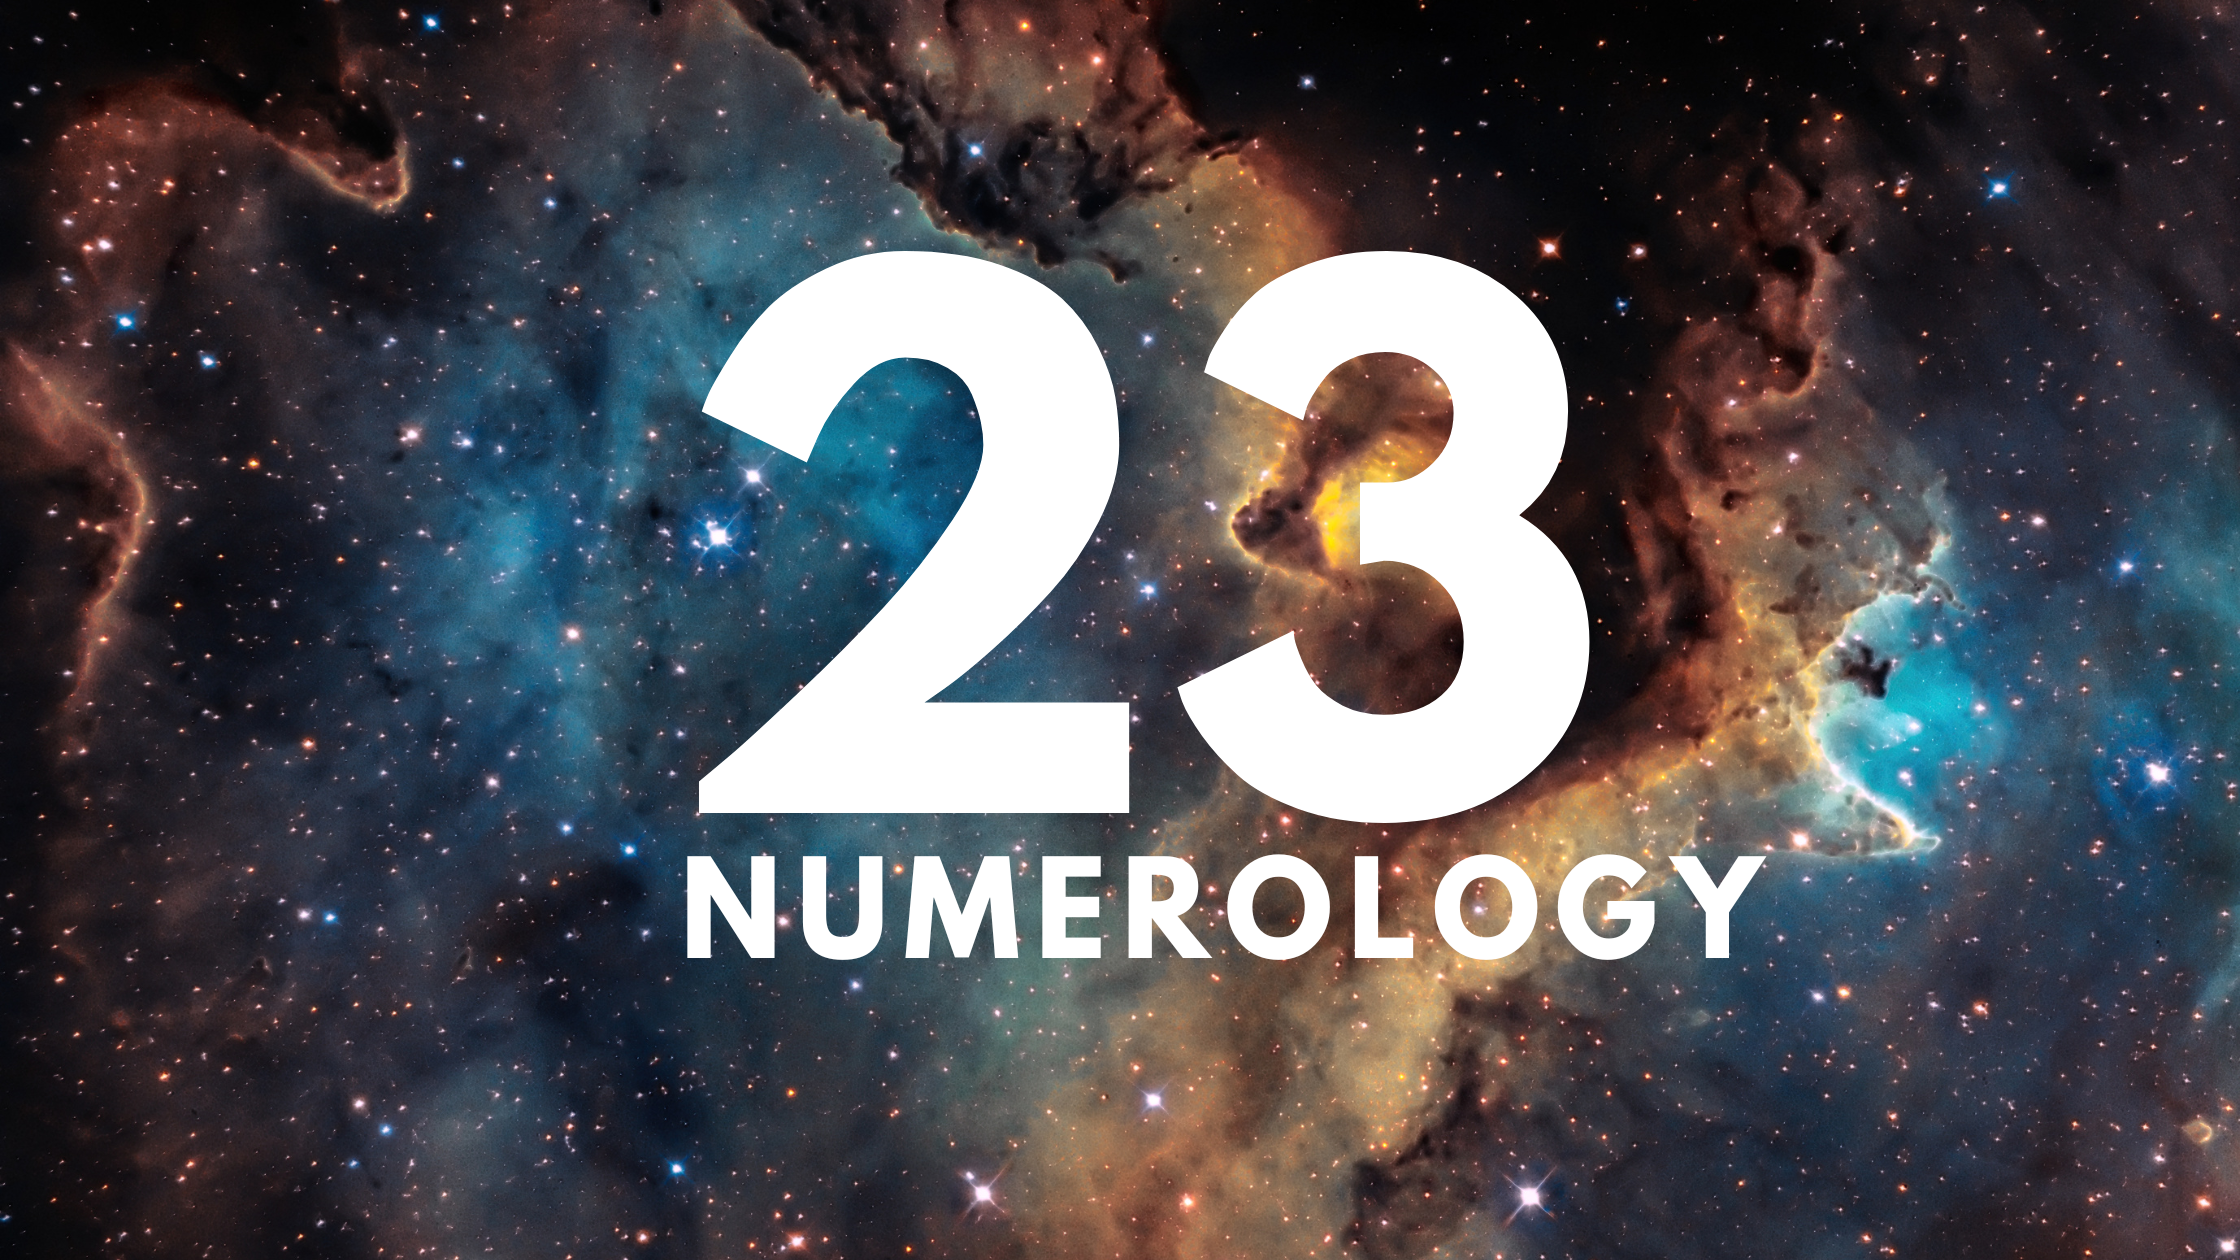 Numerology 22